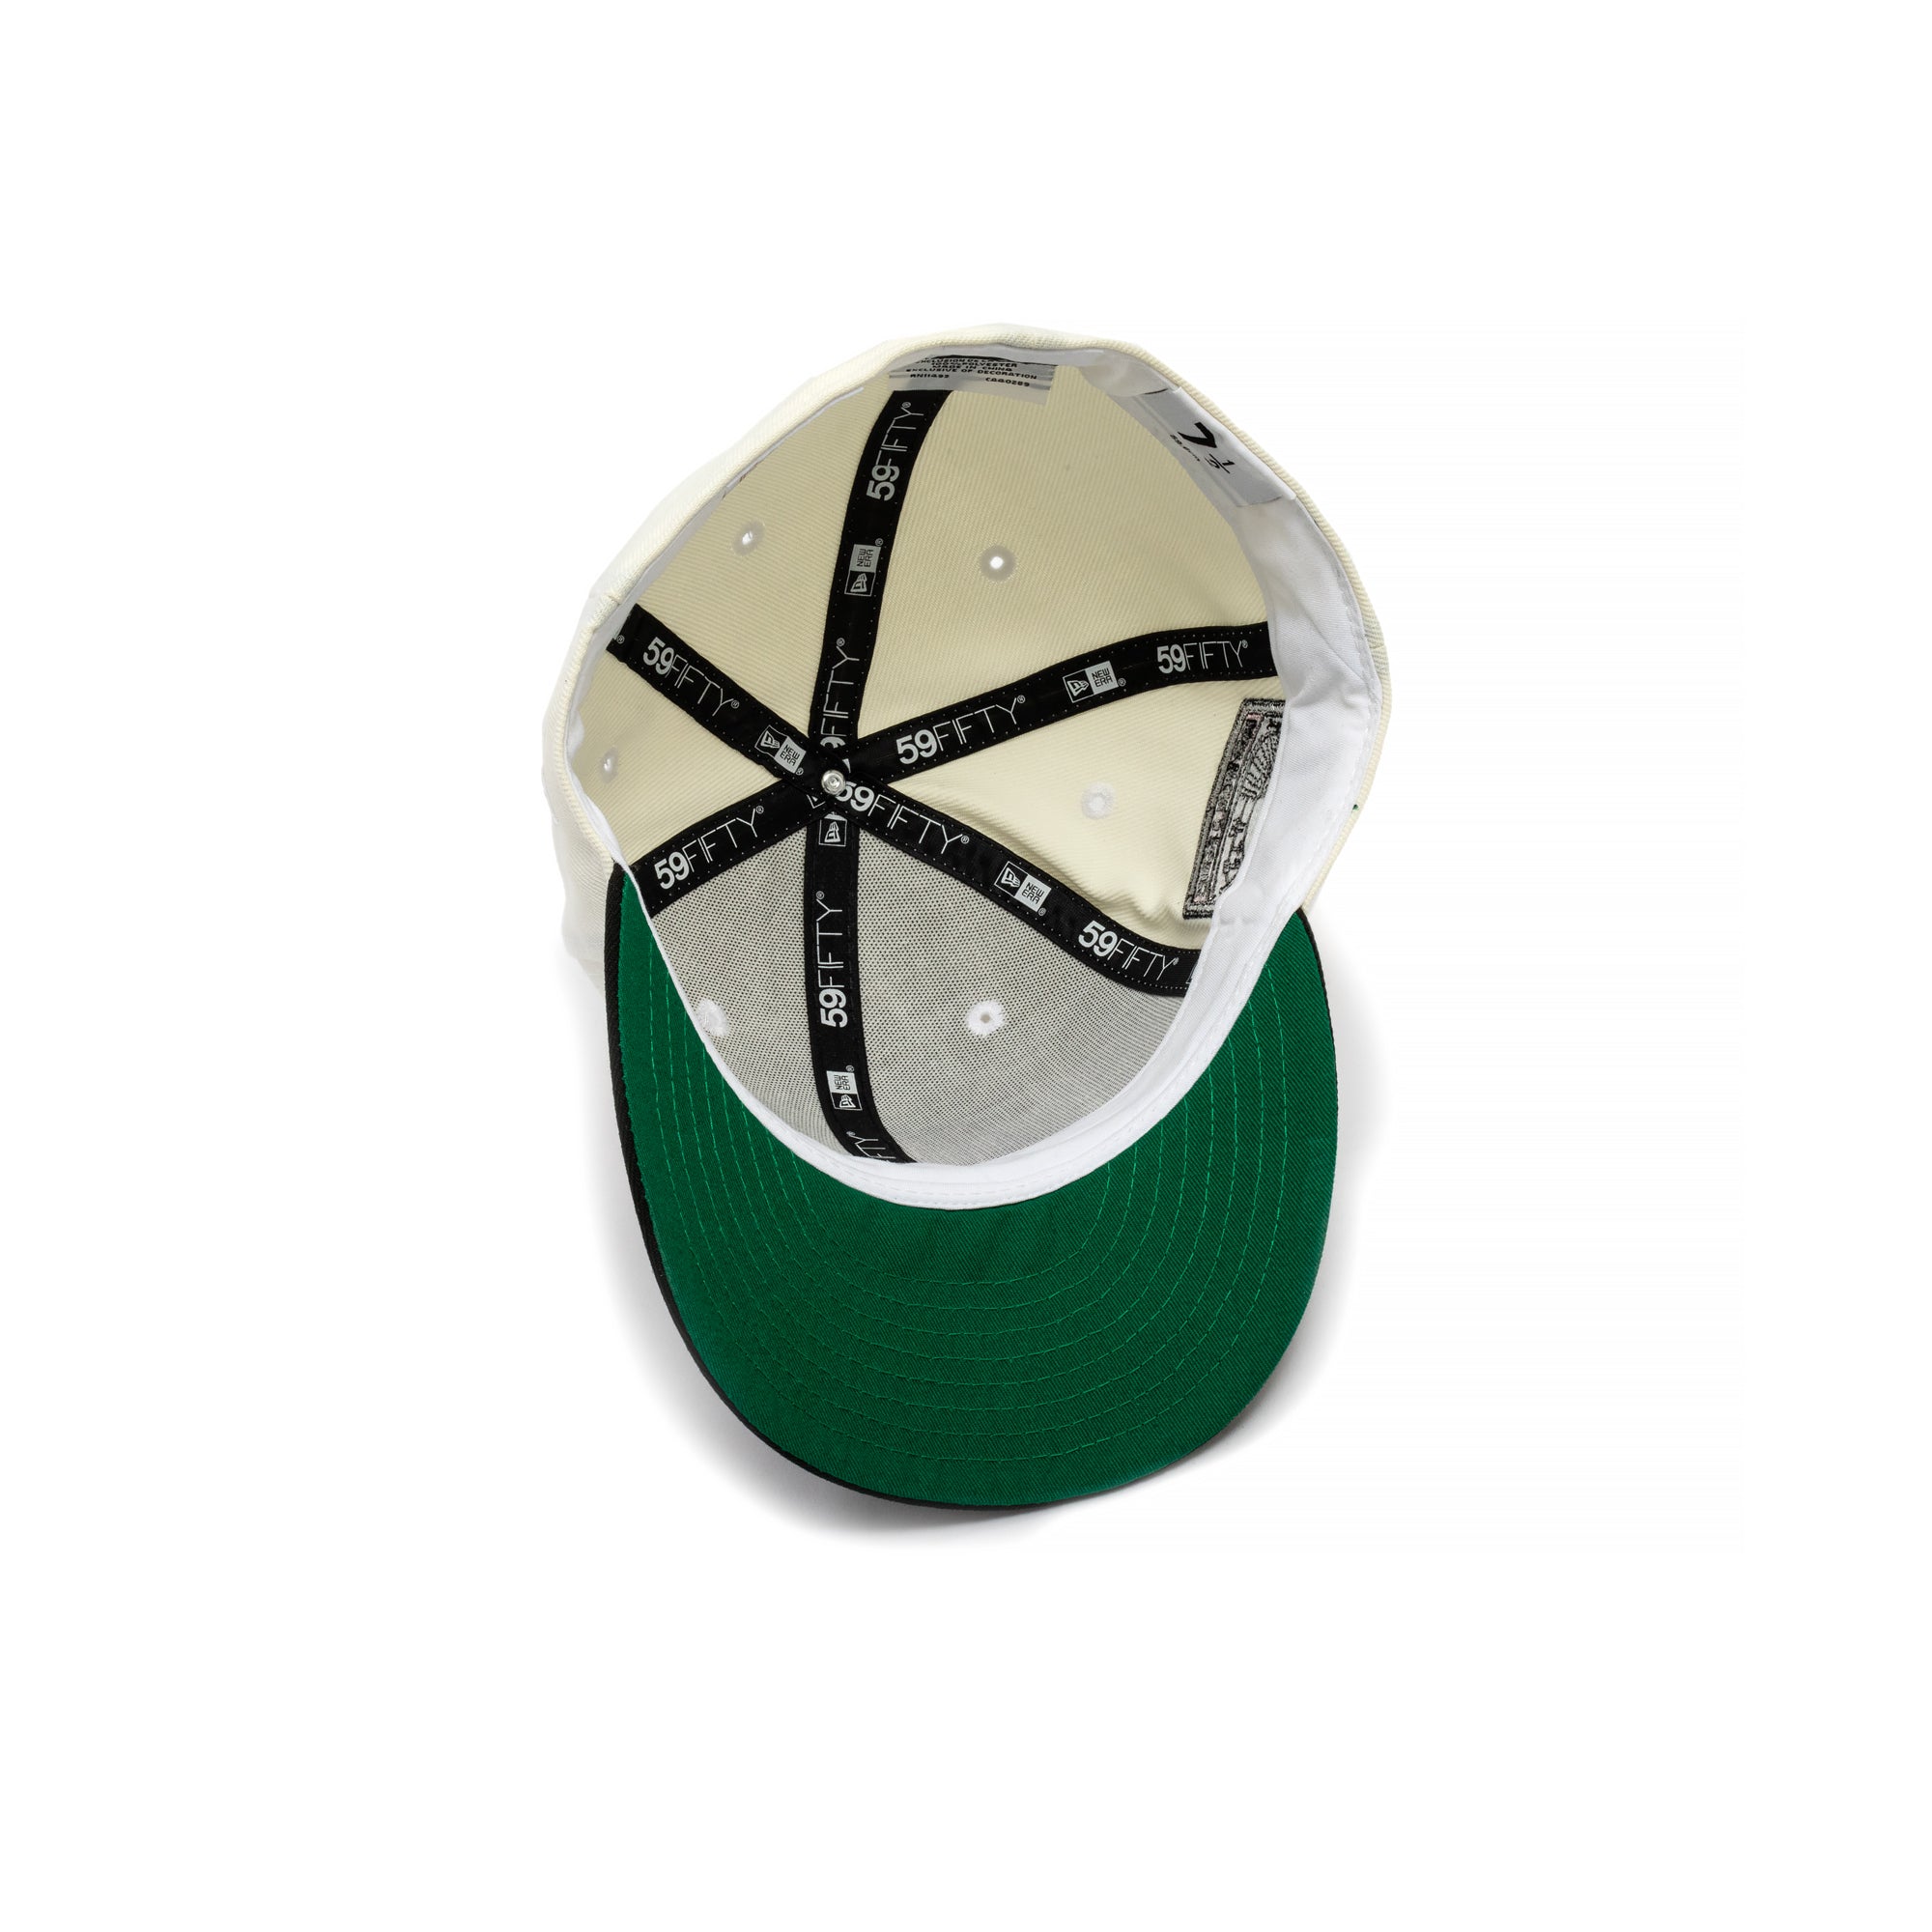 New Era 59Fifty NY Mets PapiCapsAlot Hat